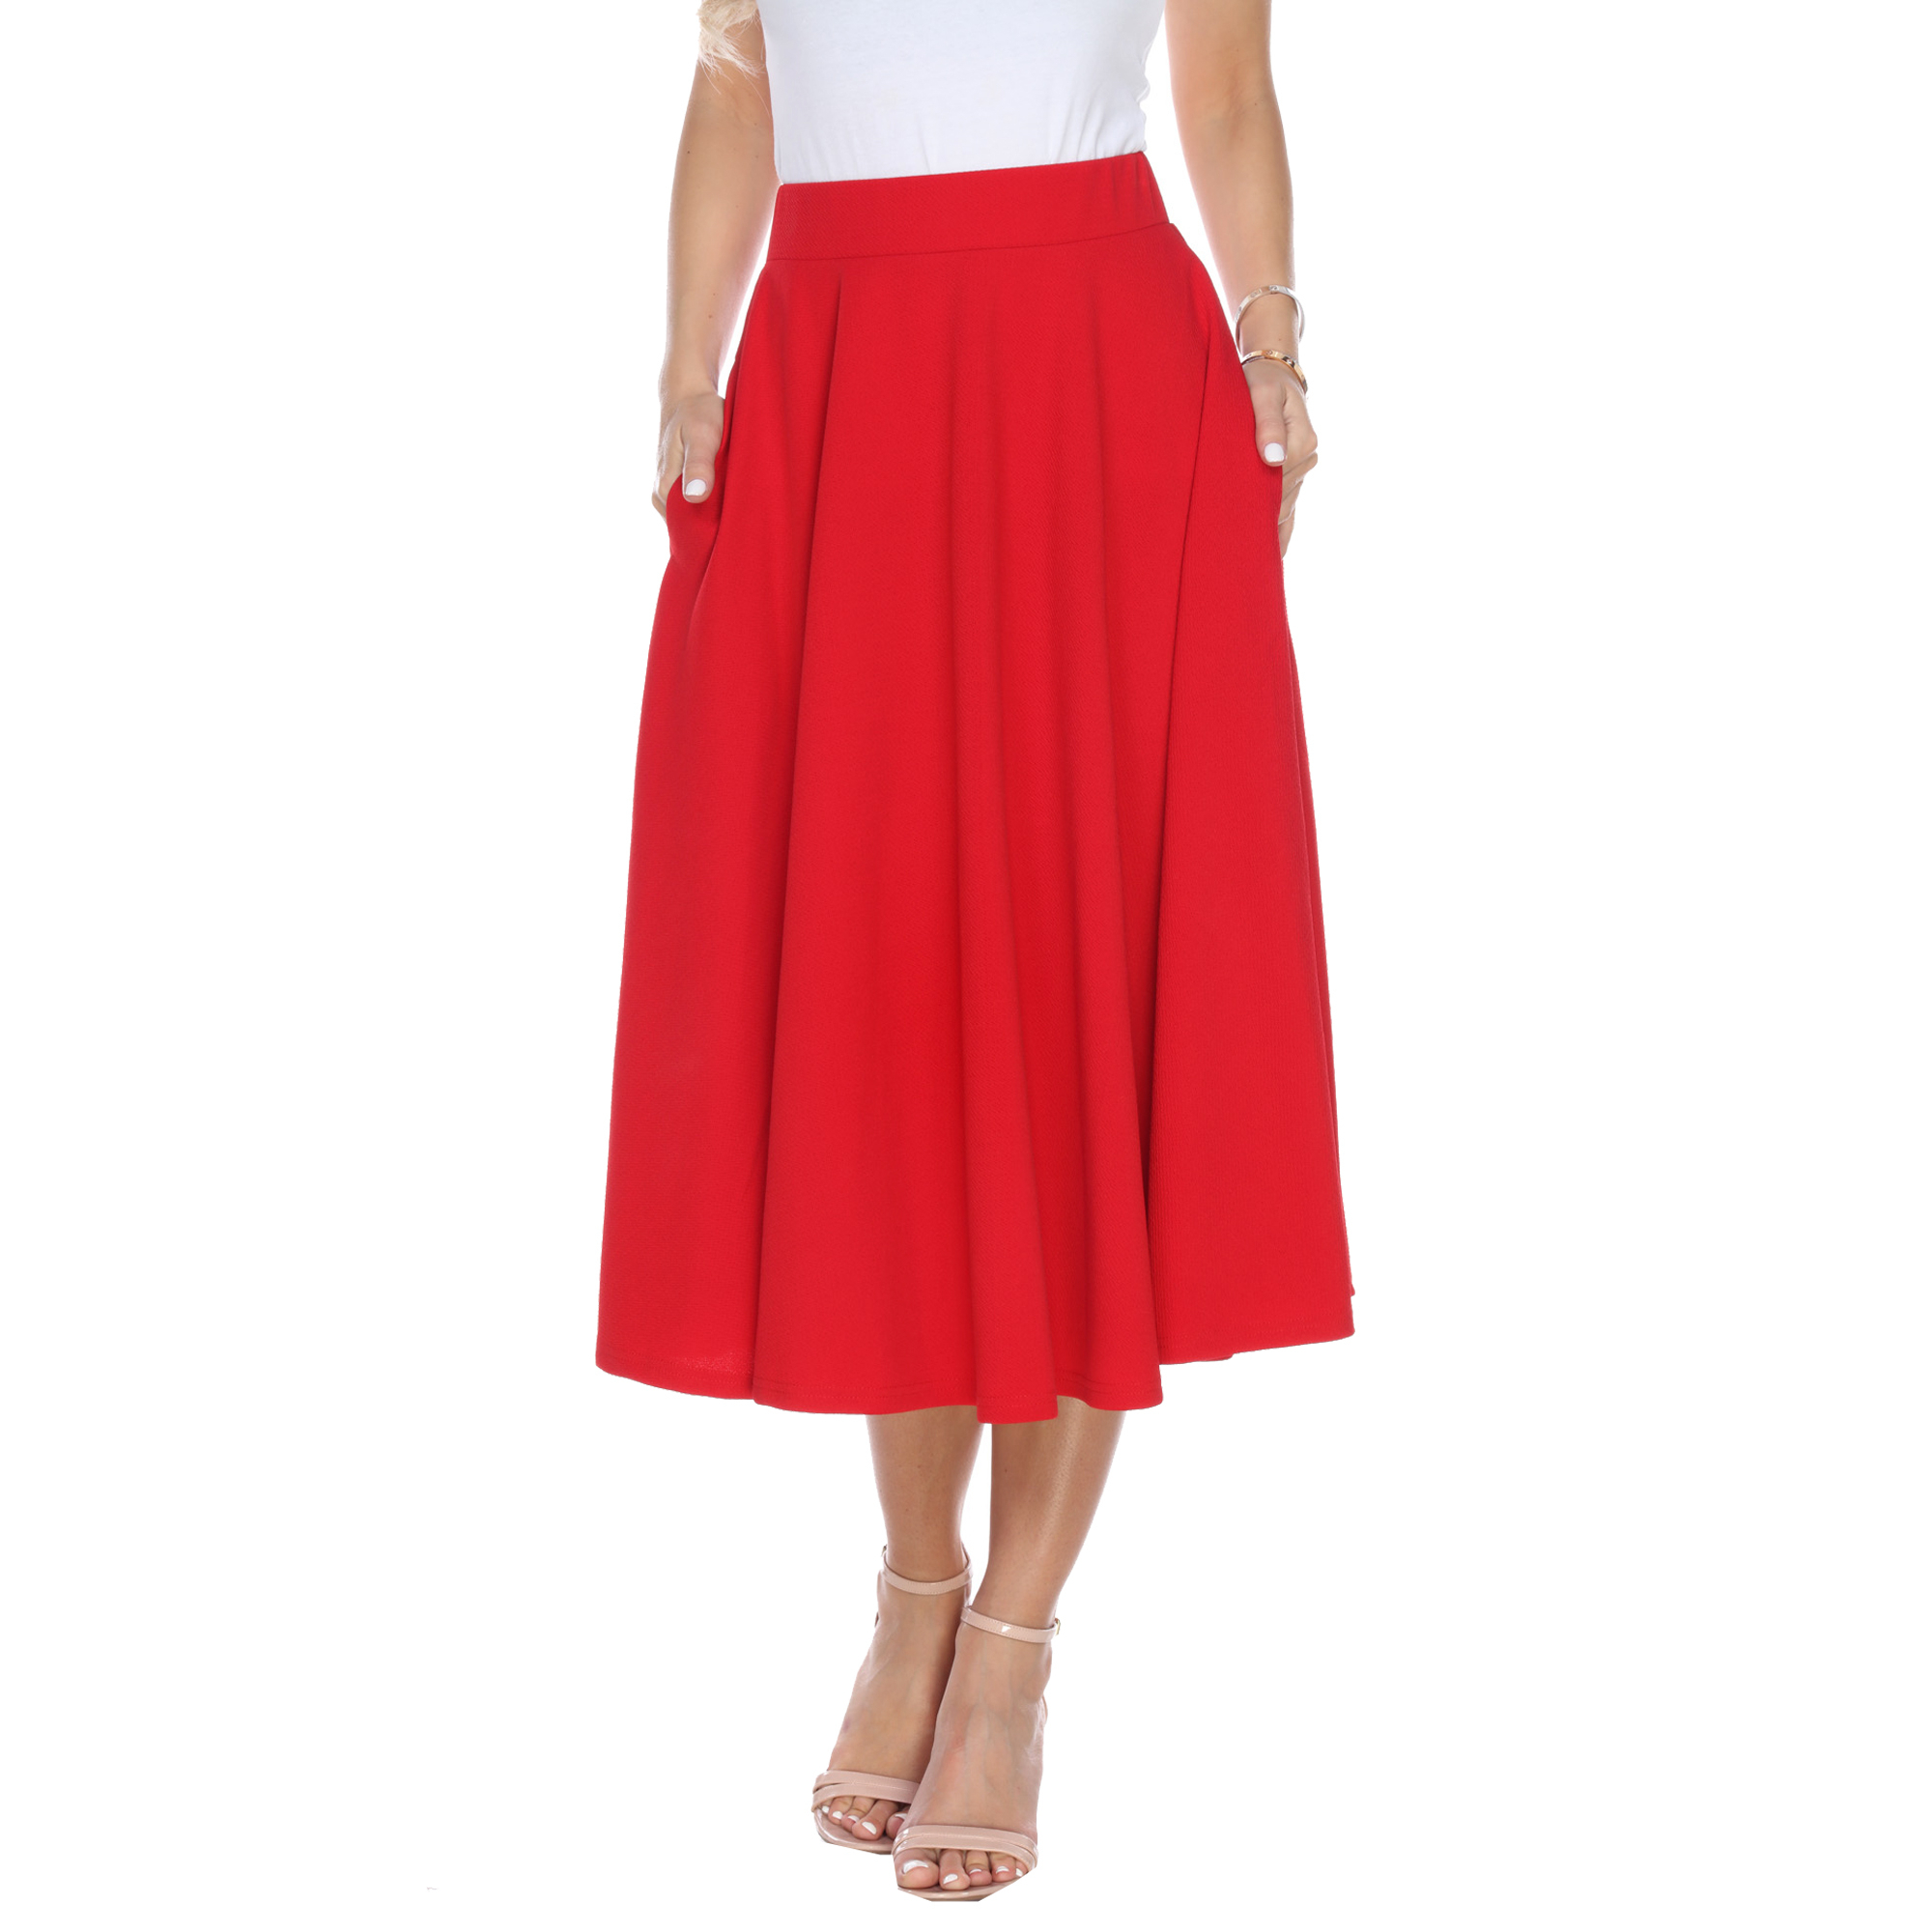 White Mark Womenâs Flared Midi Skirt With Pockets - Red, 3X